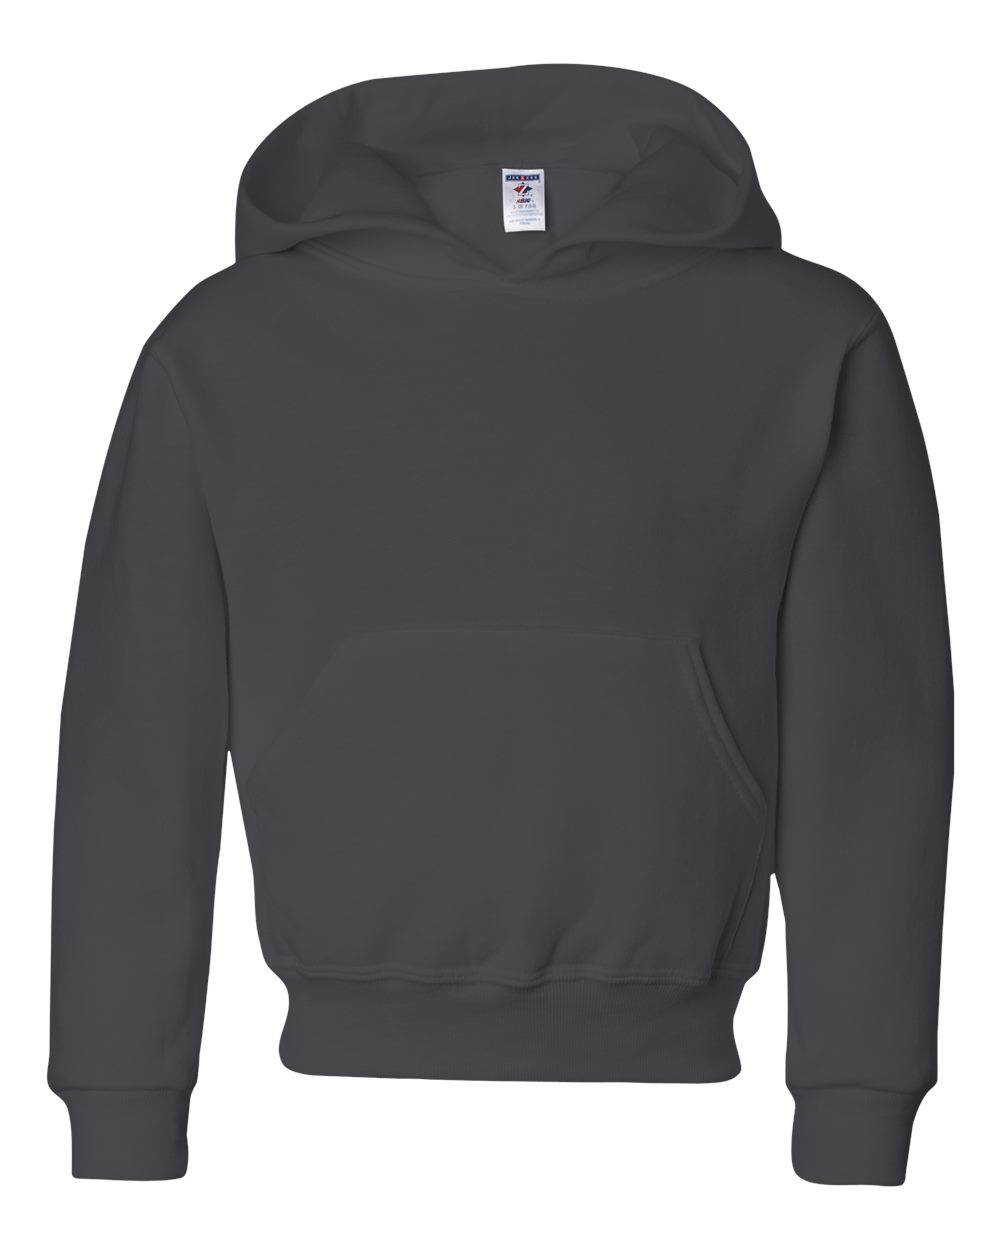 JERZEES 996YR - NuBlend Youth Hooded Sweatshirt $14.20 - Sweatshirts